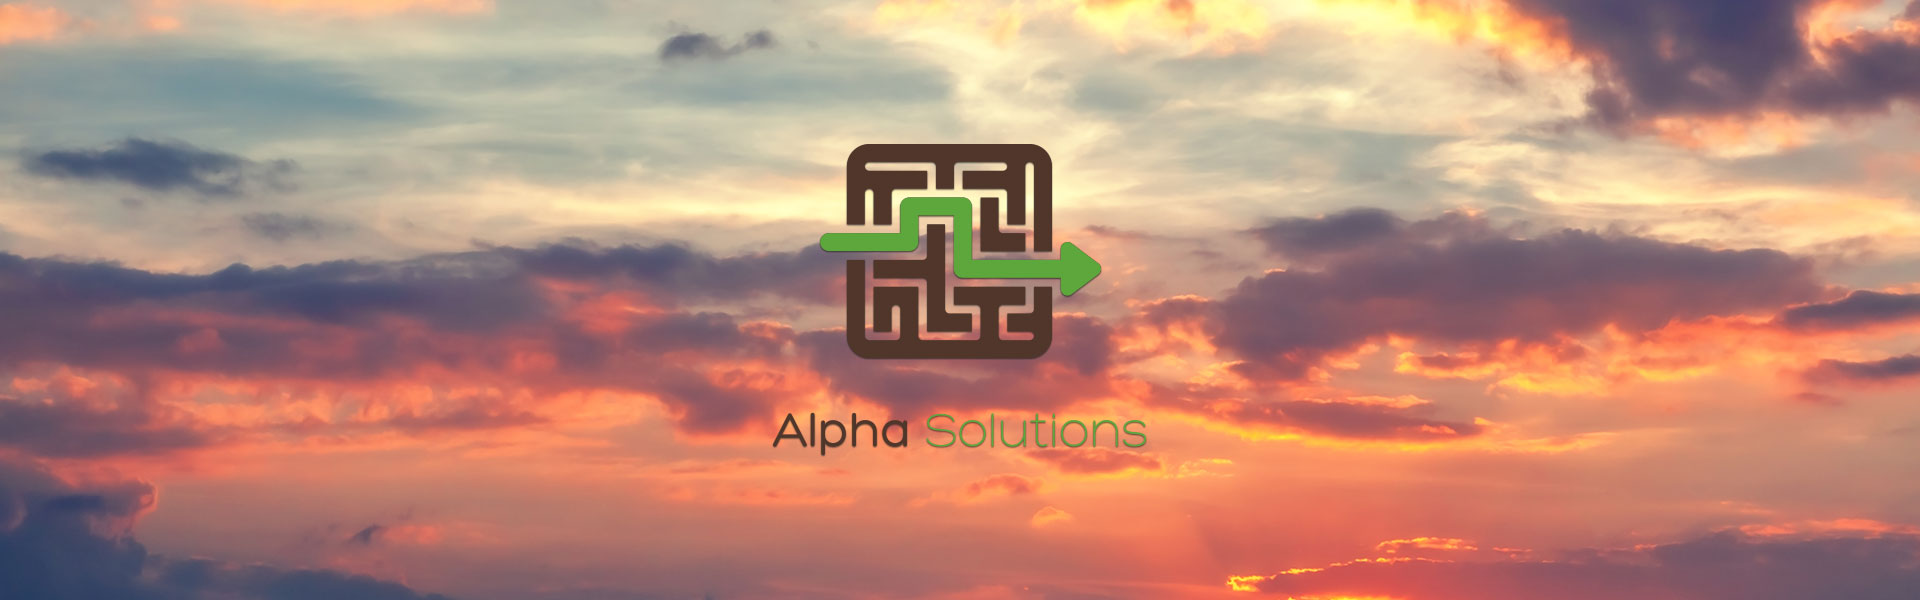 Alpha Solutions Management Contact